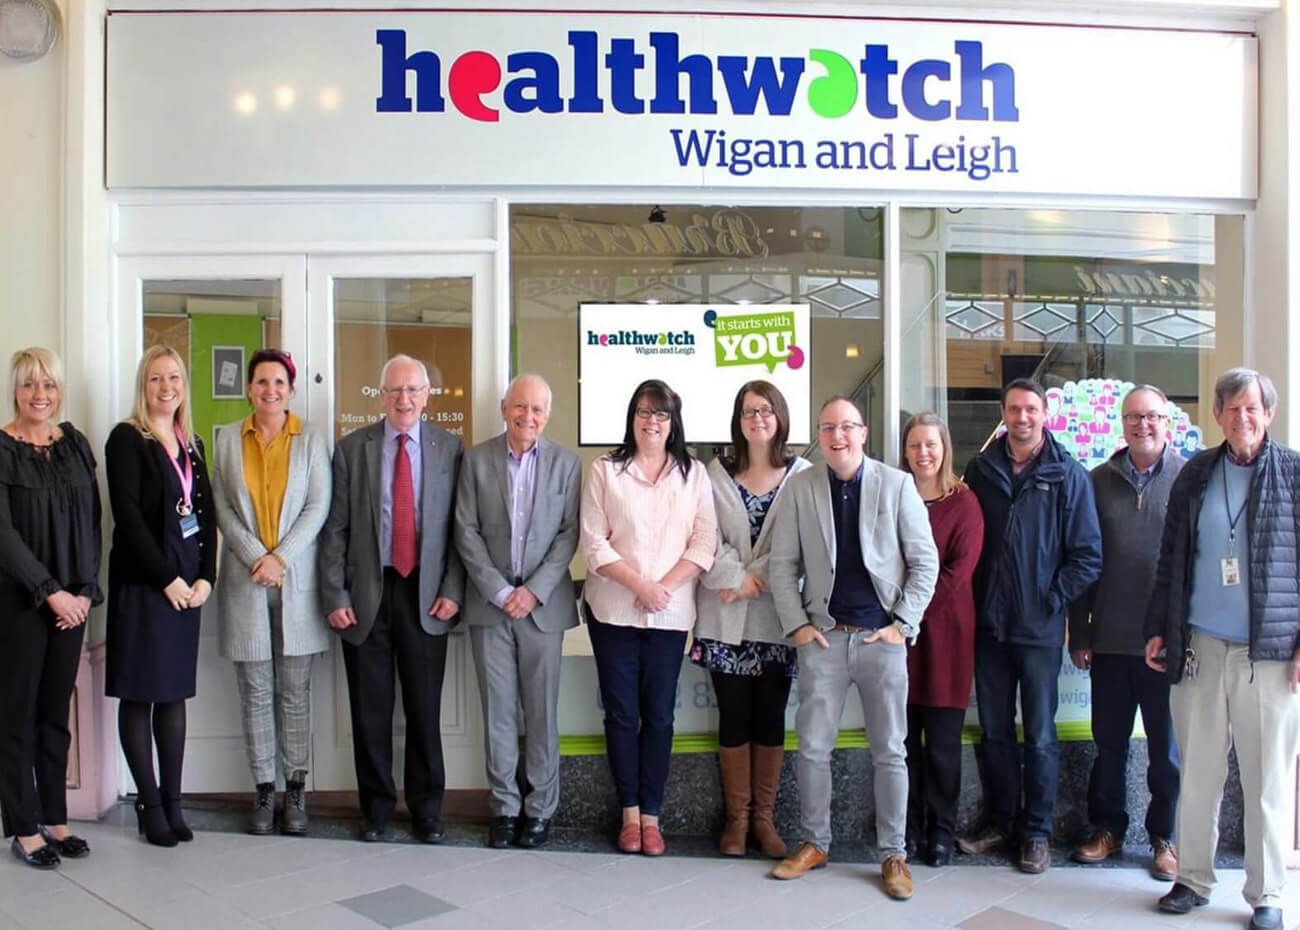 Healthwatch Wigan & Leigh Signage